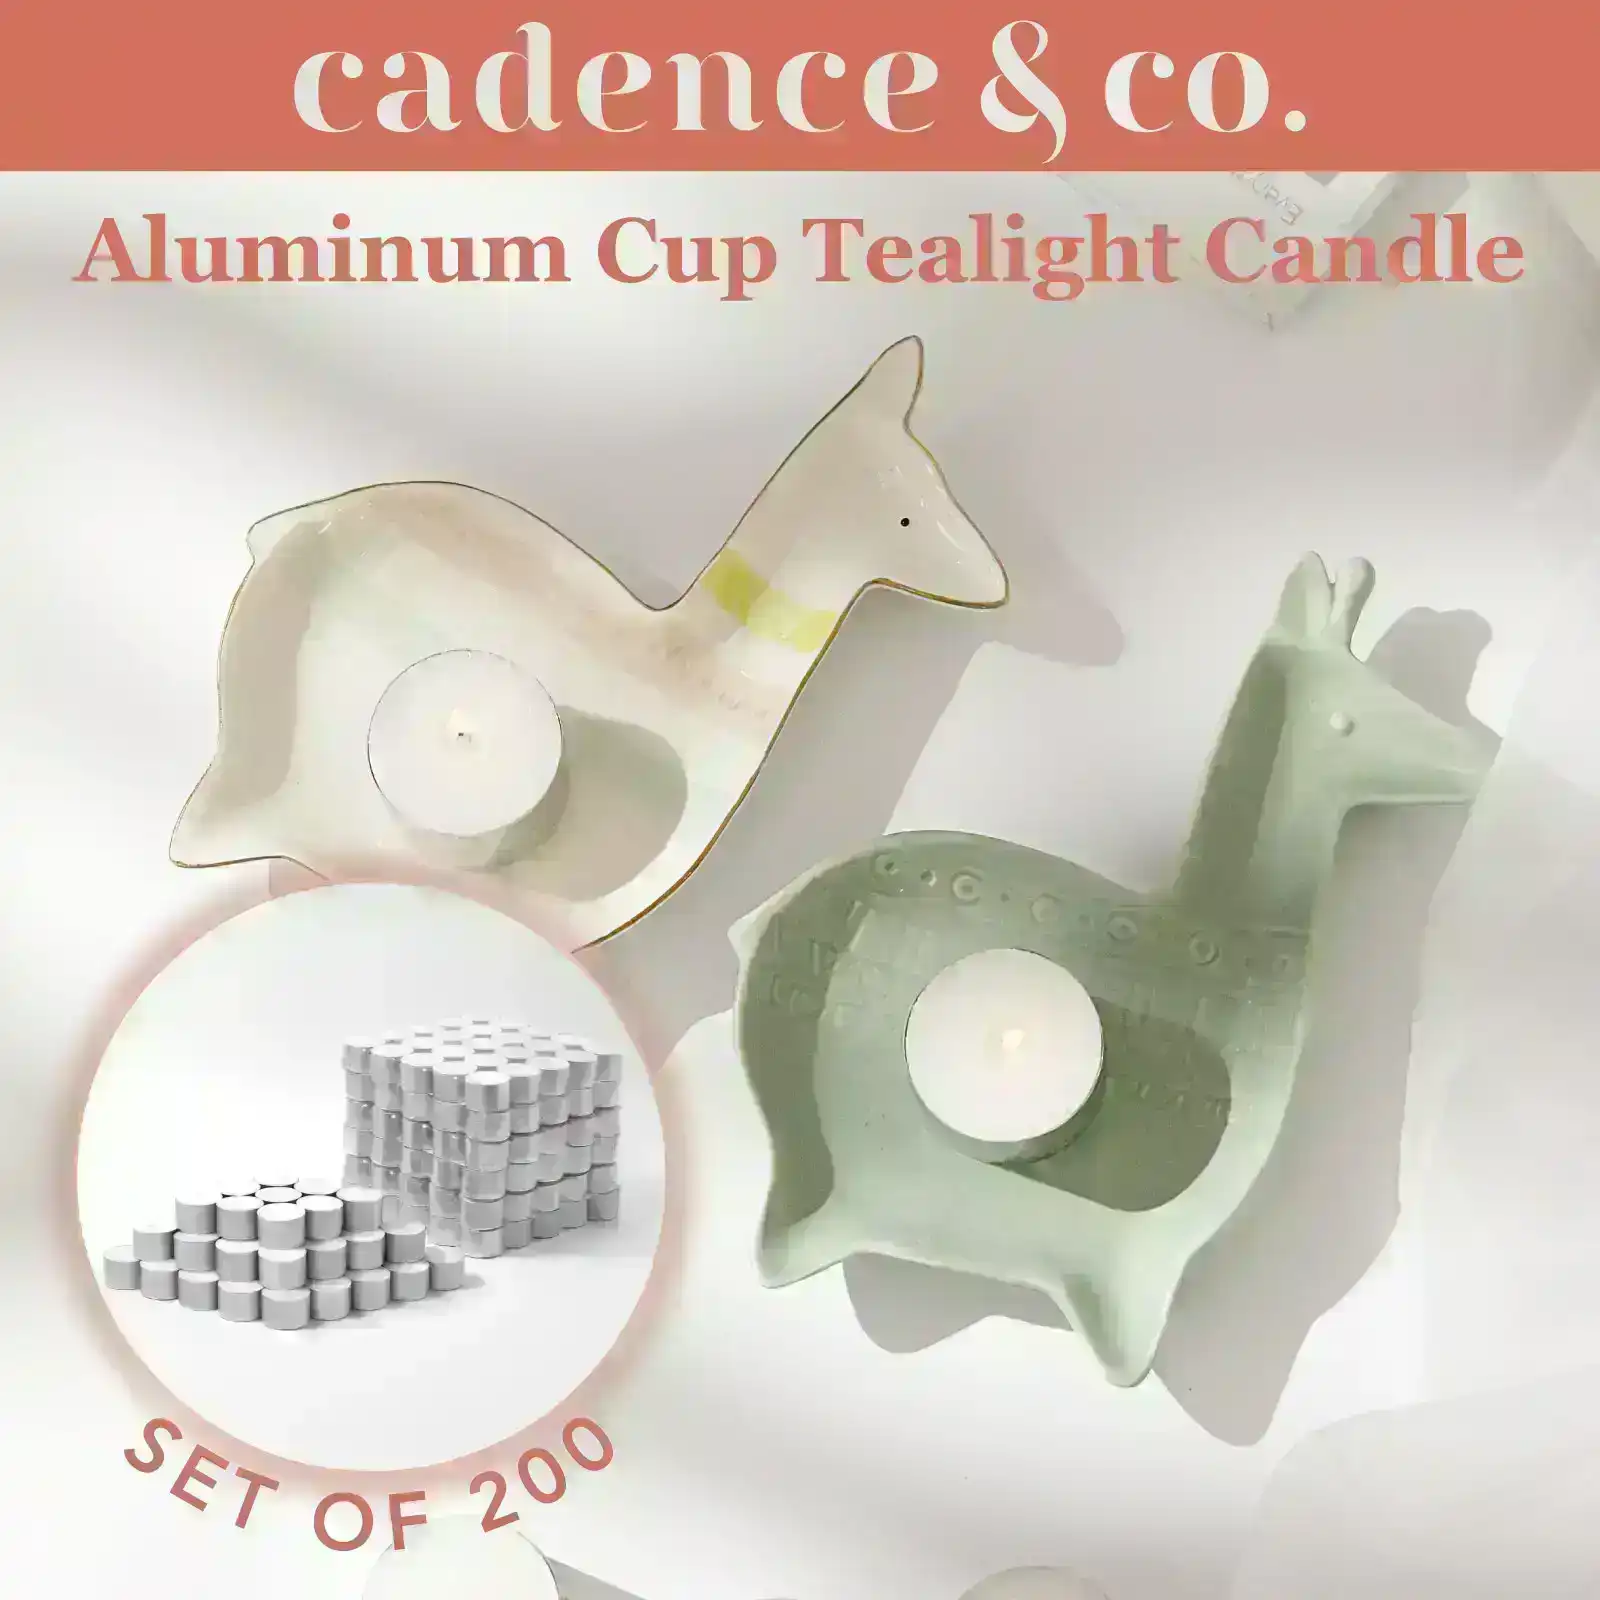 Cadence & Co Aluminum Cup Tealight Candle Set 200